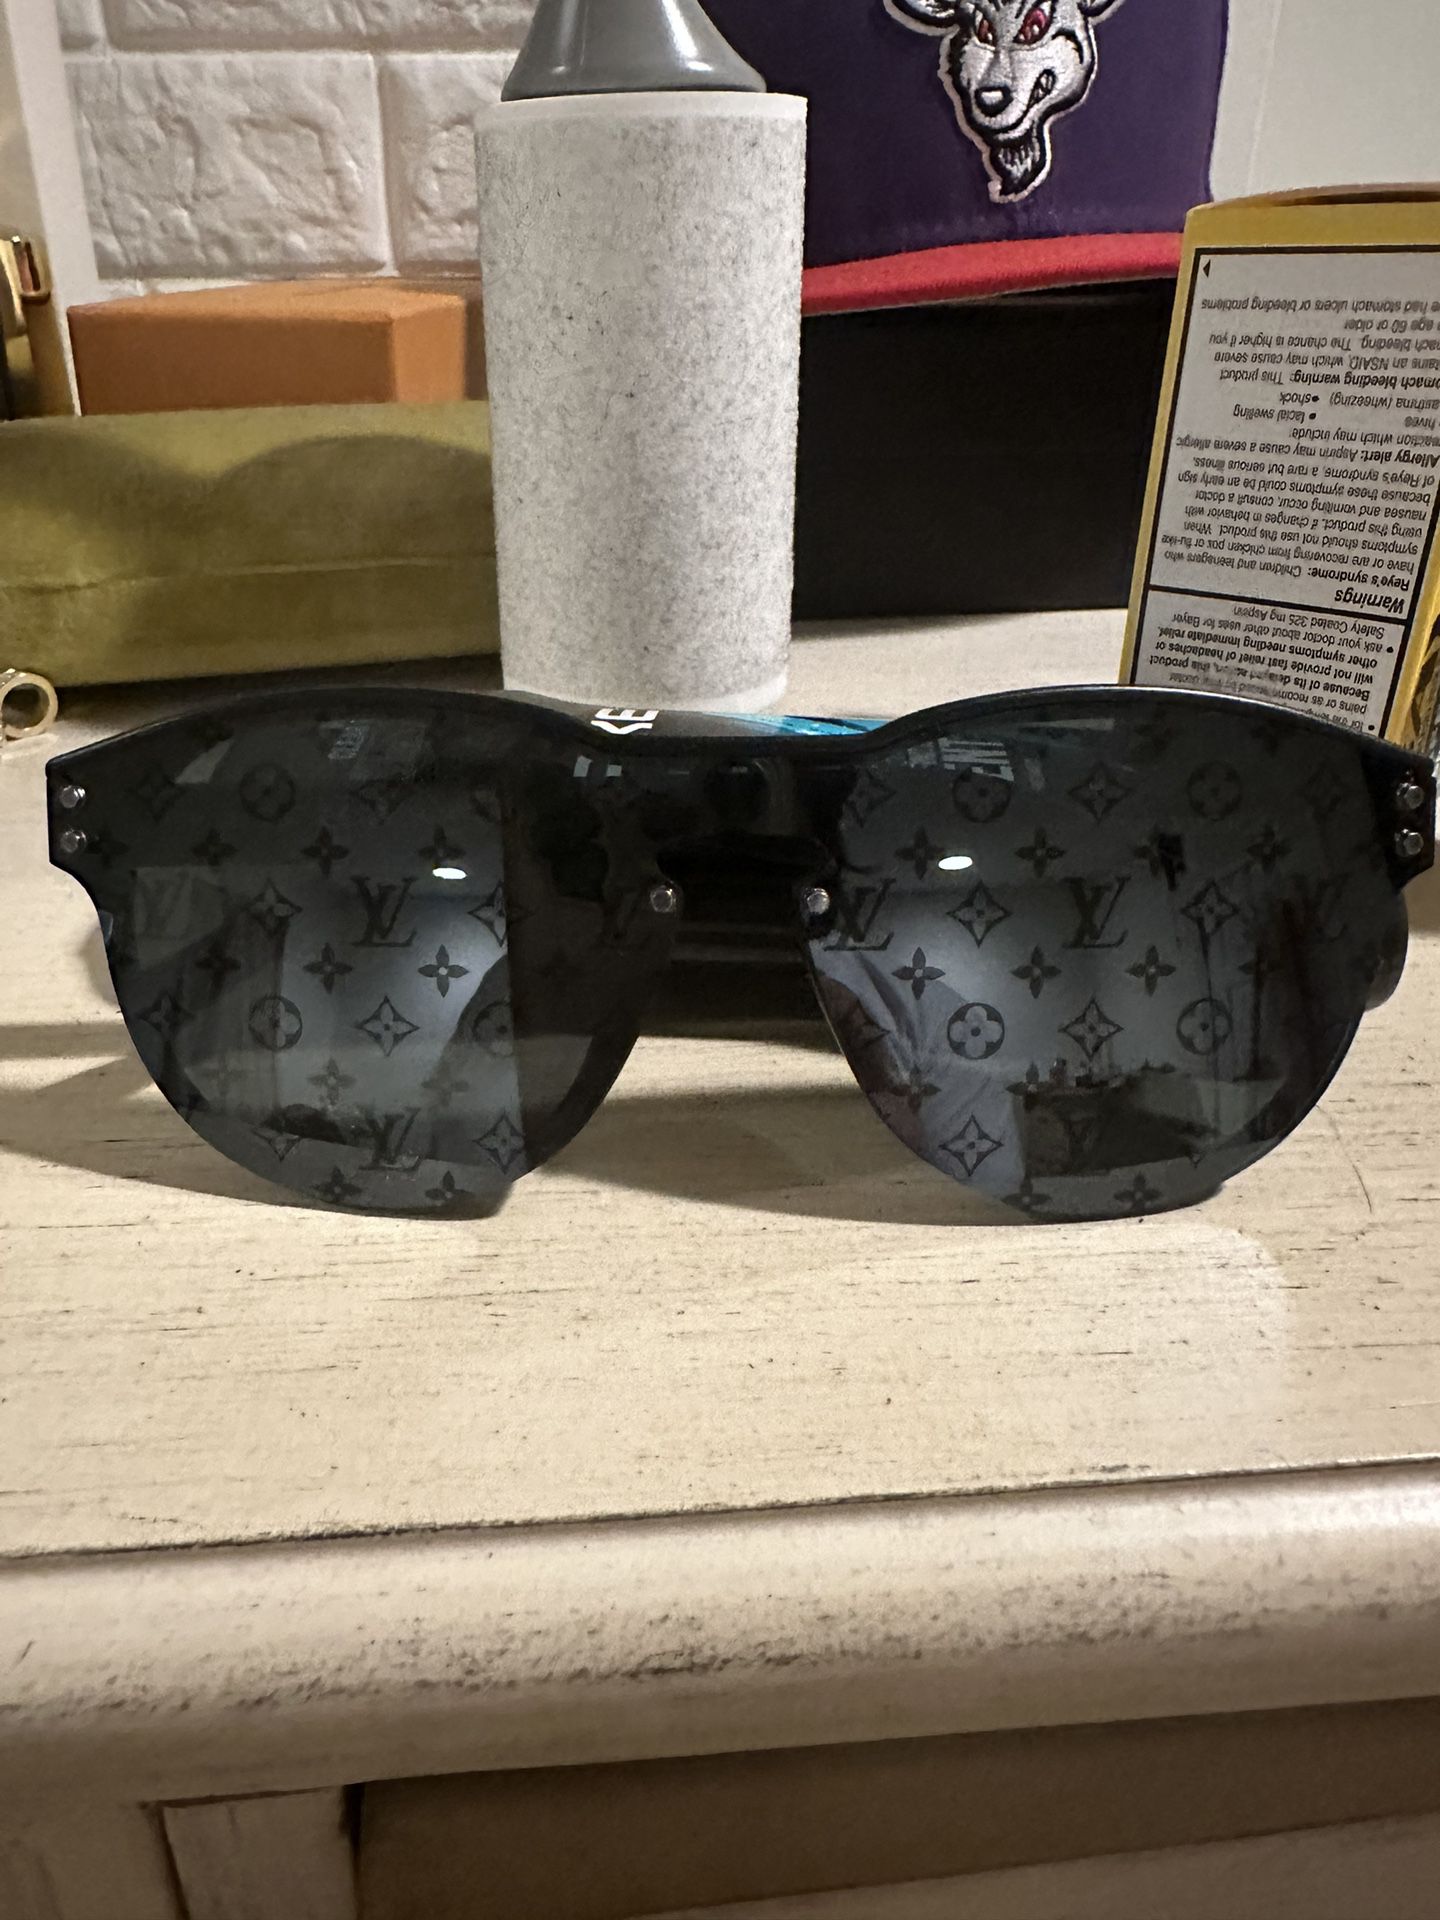 Louis Vuitton Z1333E LV Waimea Round Sunglasses, Black, W